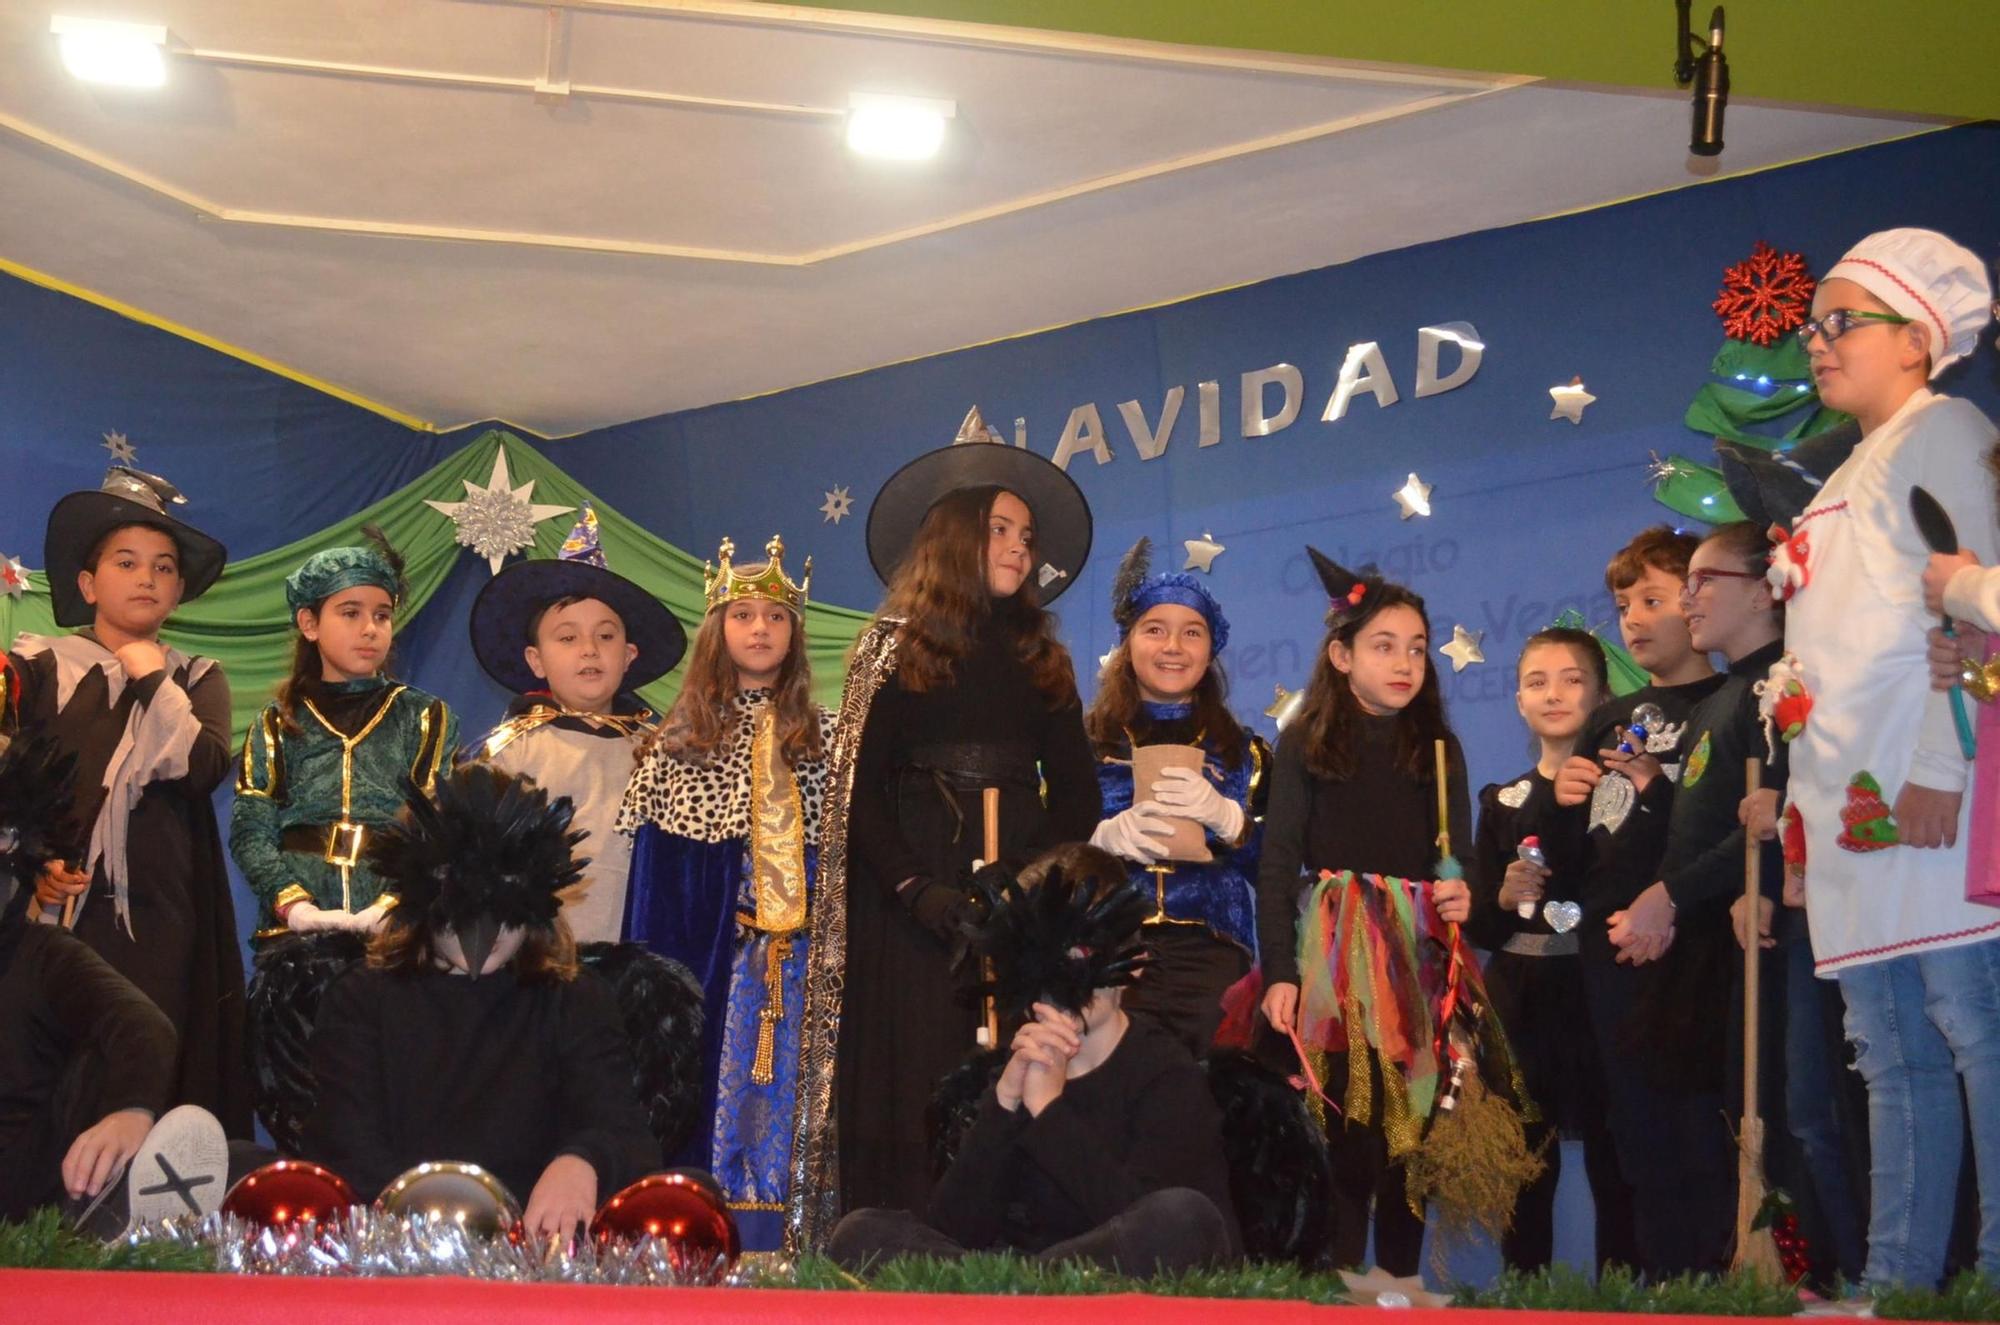 Navidad en Benavente: La Vega se divierte por Navidad